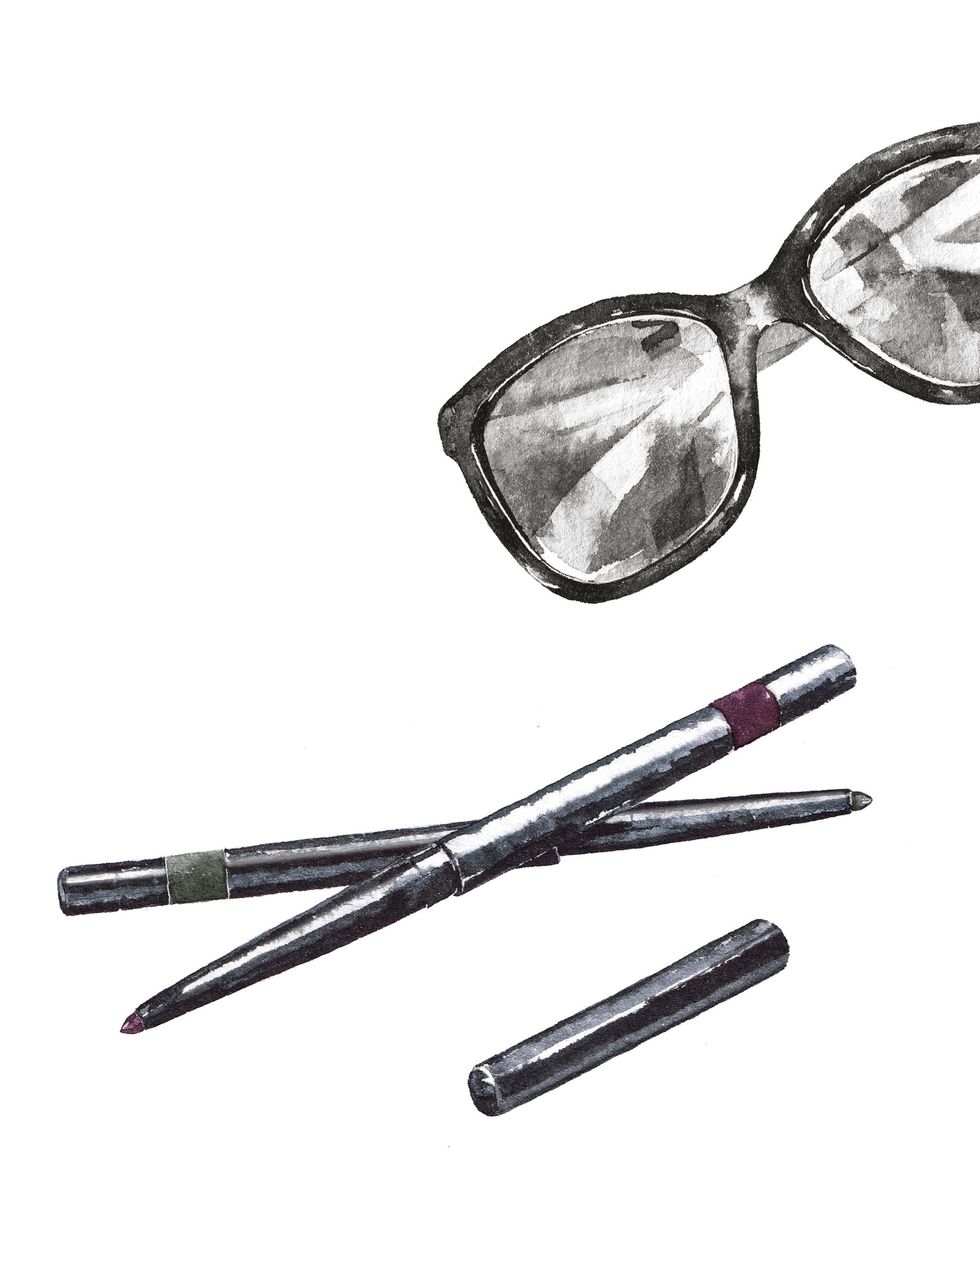 Eyewear, Glasses, Cutlery, Sunglasses, Personal protective equipment, 